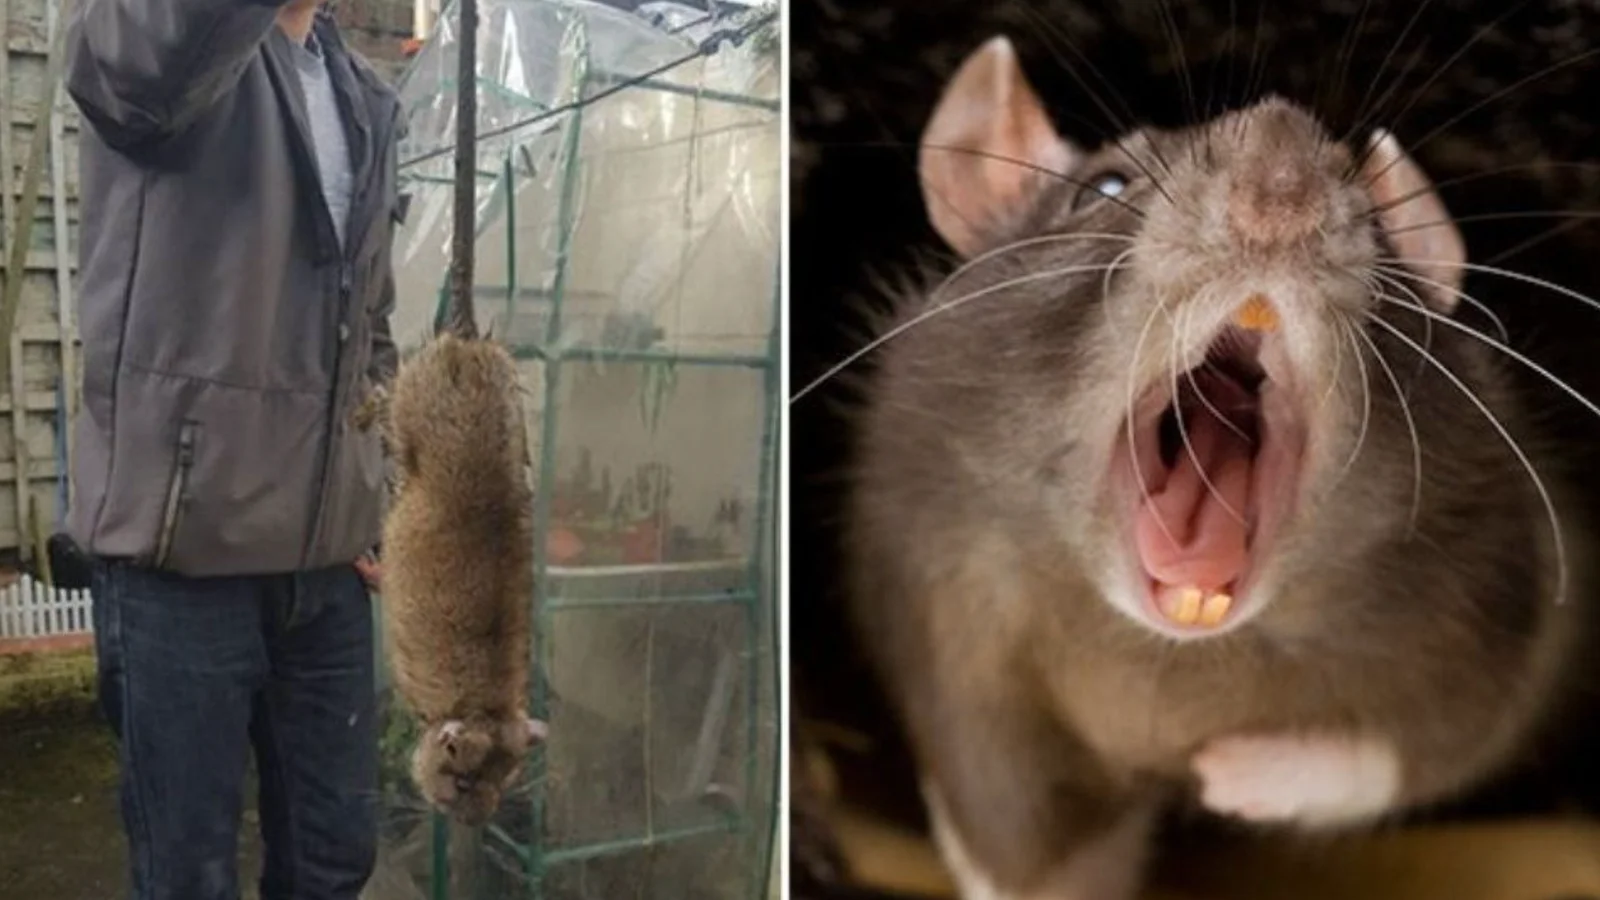 varios-medios-britanicos-aseguran-que-pais-enfrenta-ejercito-ratas-gigantes-capaces-masticar-hormigon_97.jpg